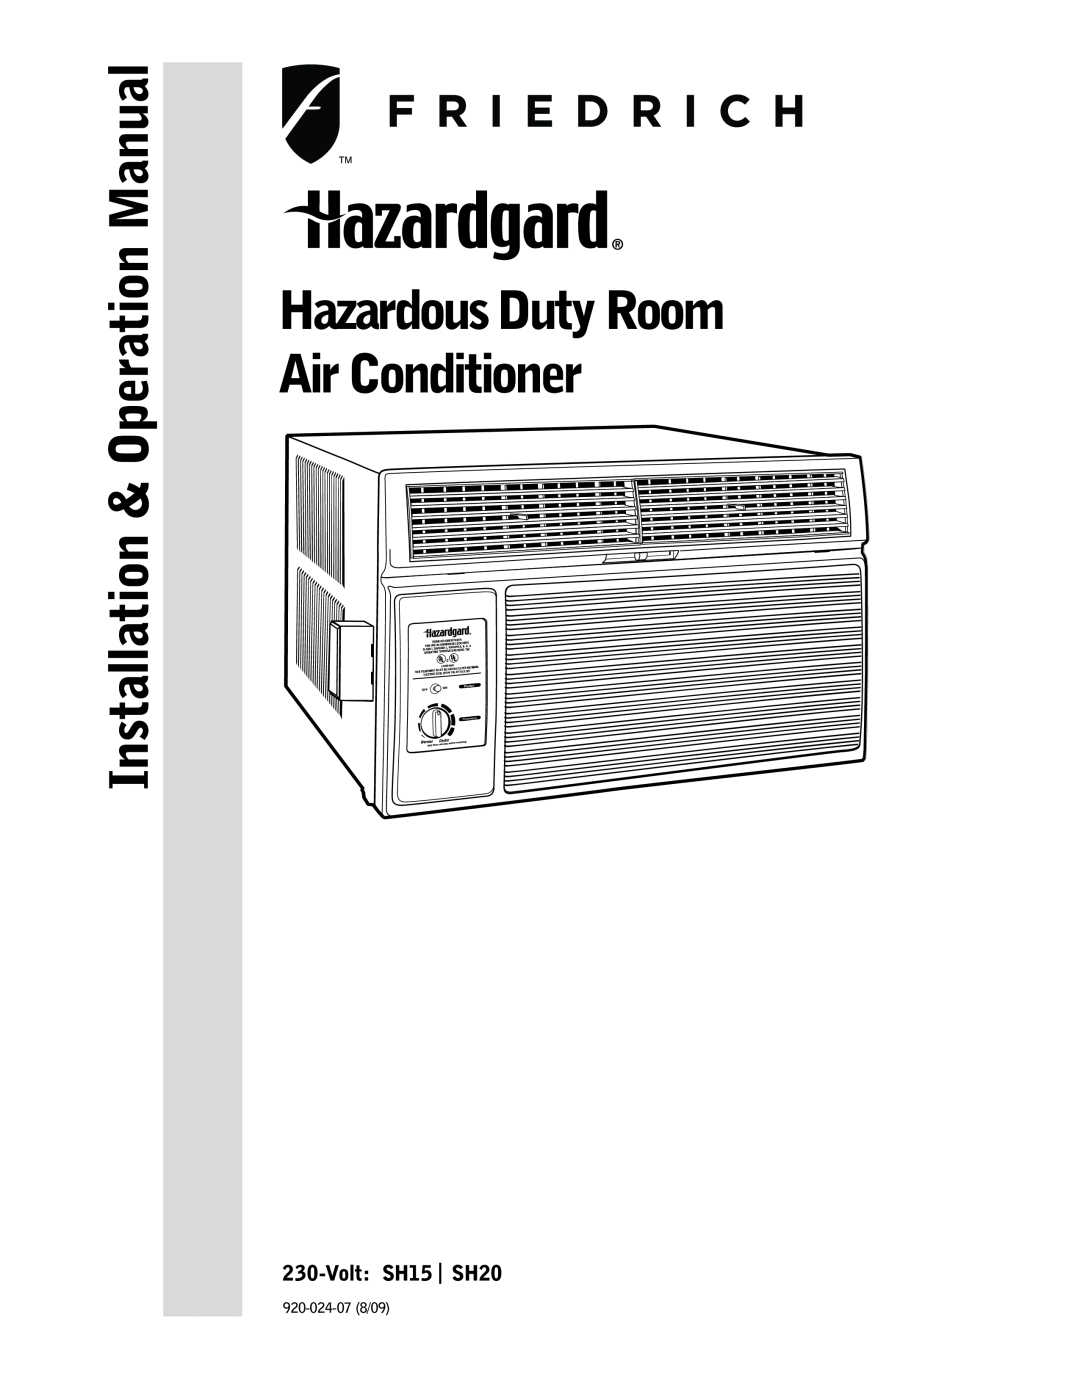 Friedrich operation manual Installation & Operation Manual, Hazardous Duty Room Air Conditioner, Volt:SH15 | SH20 